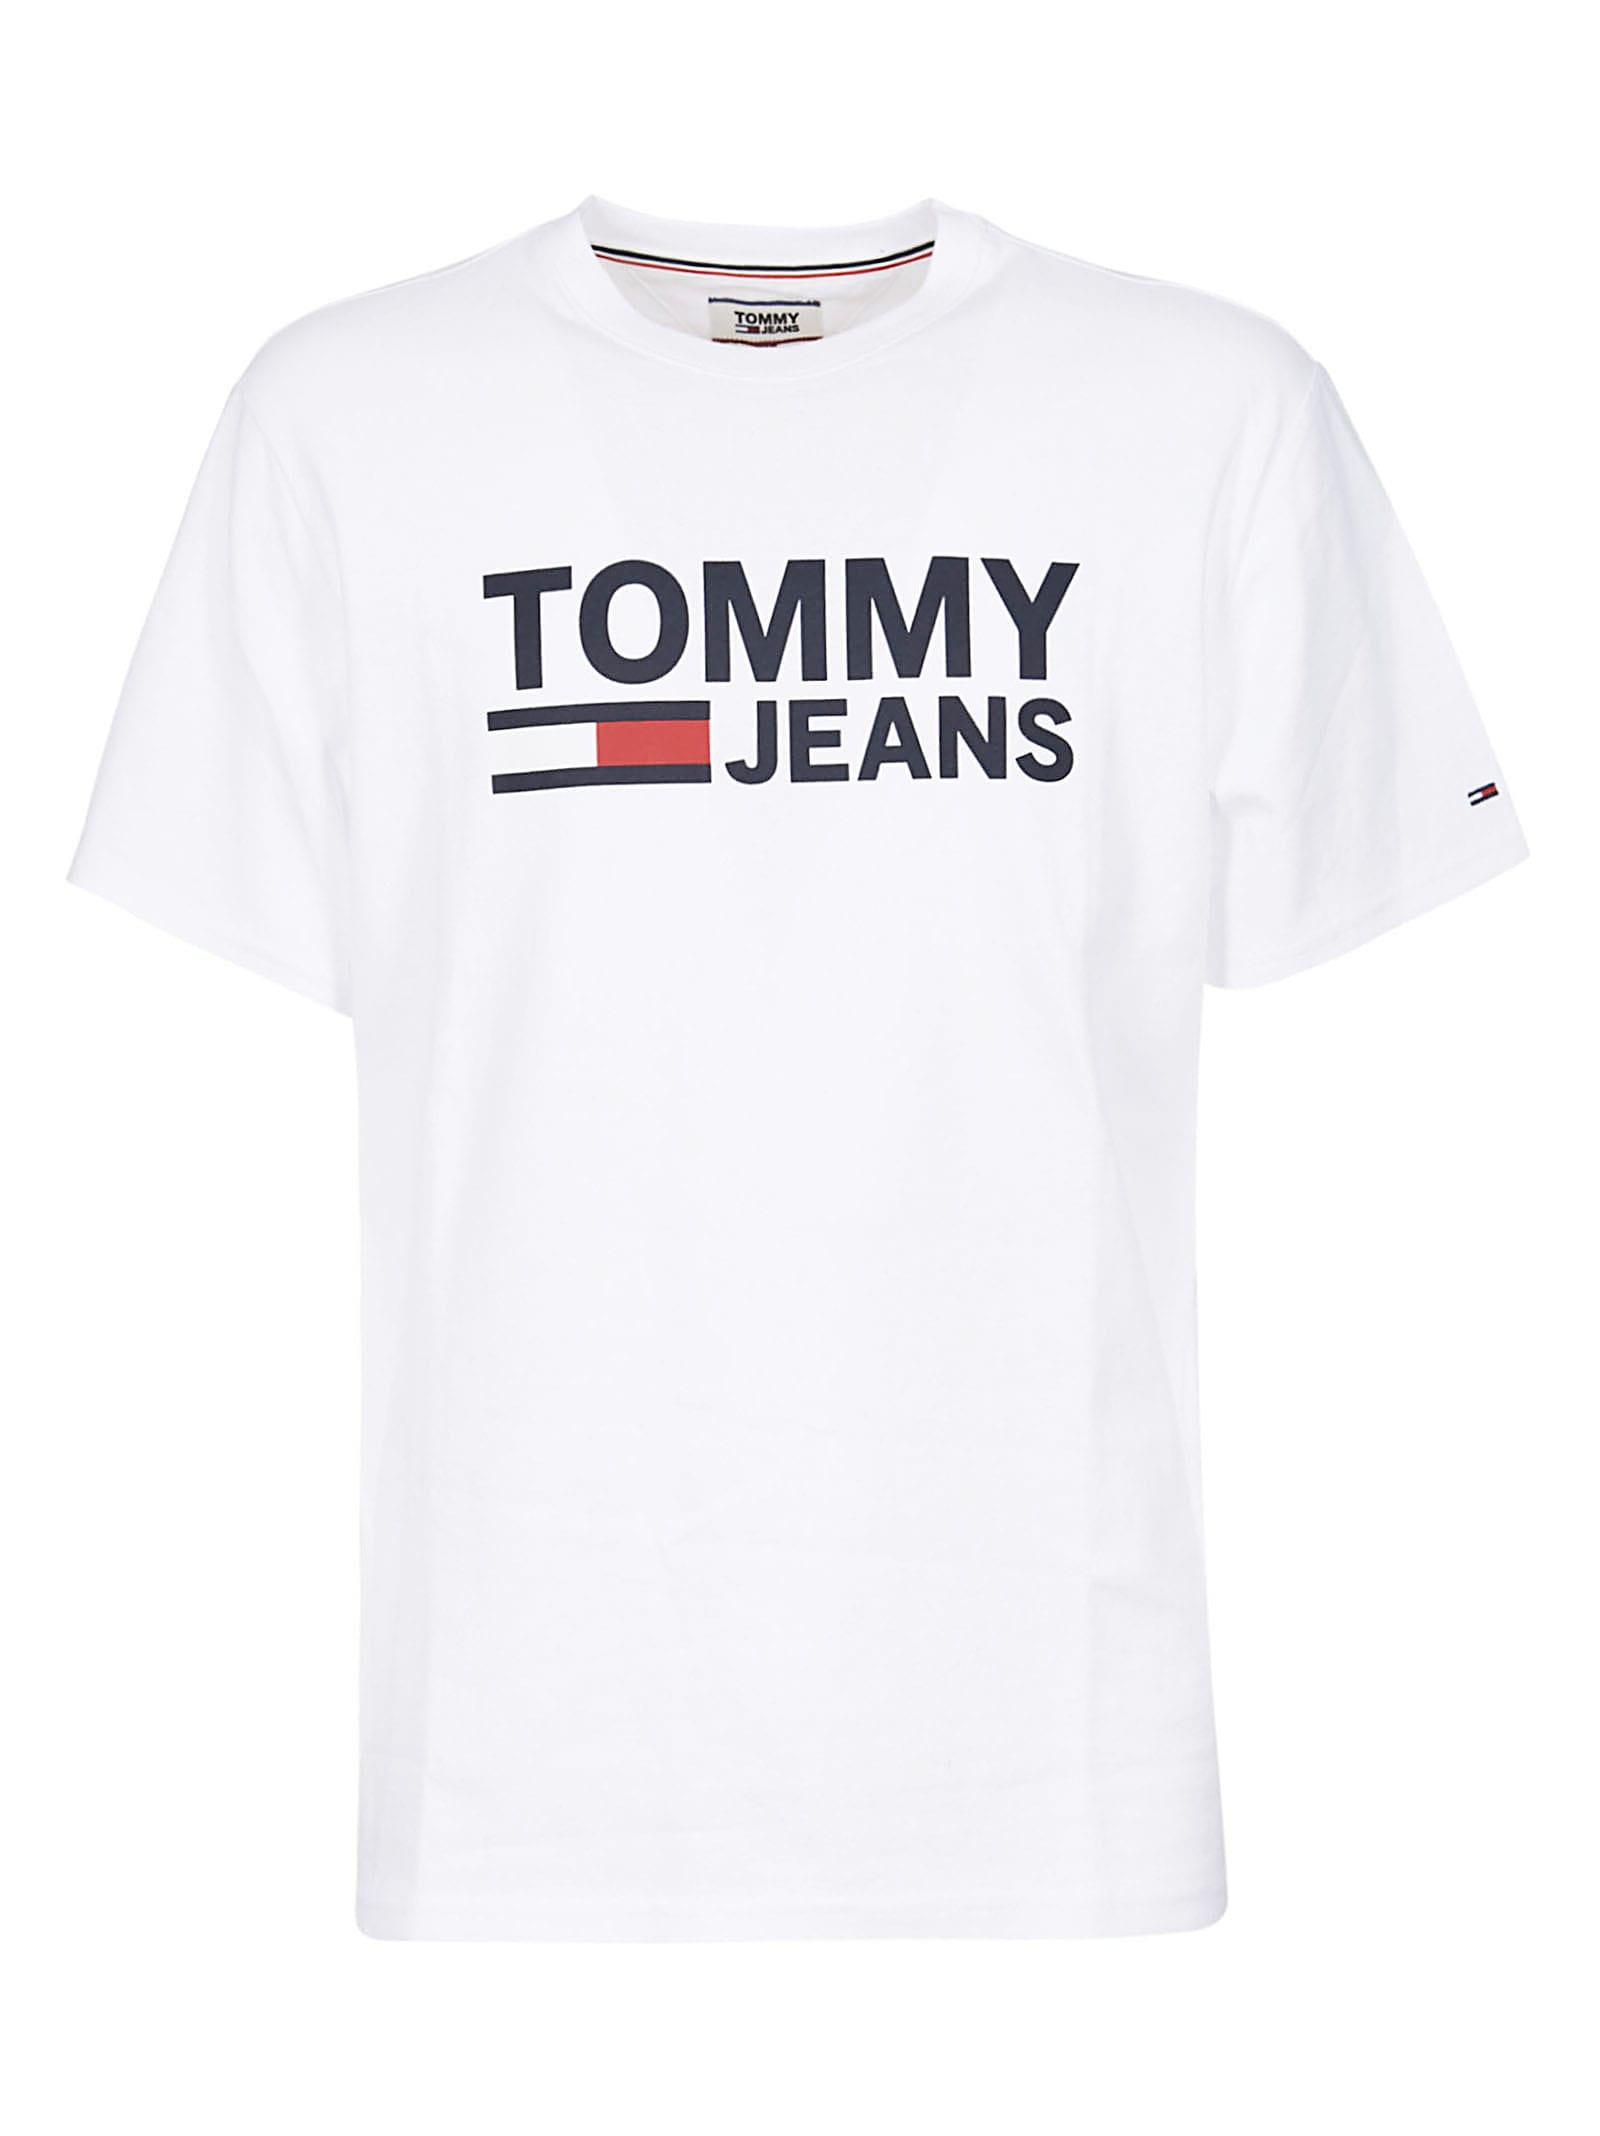 best tommy hilfiger shirts